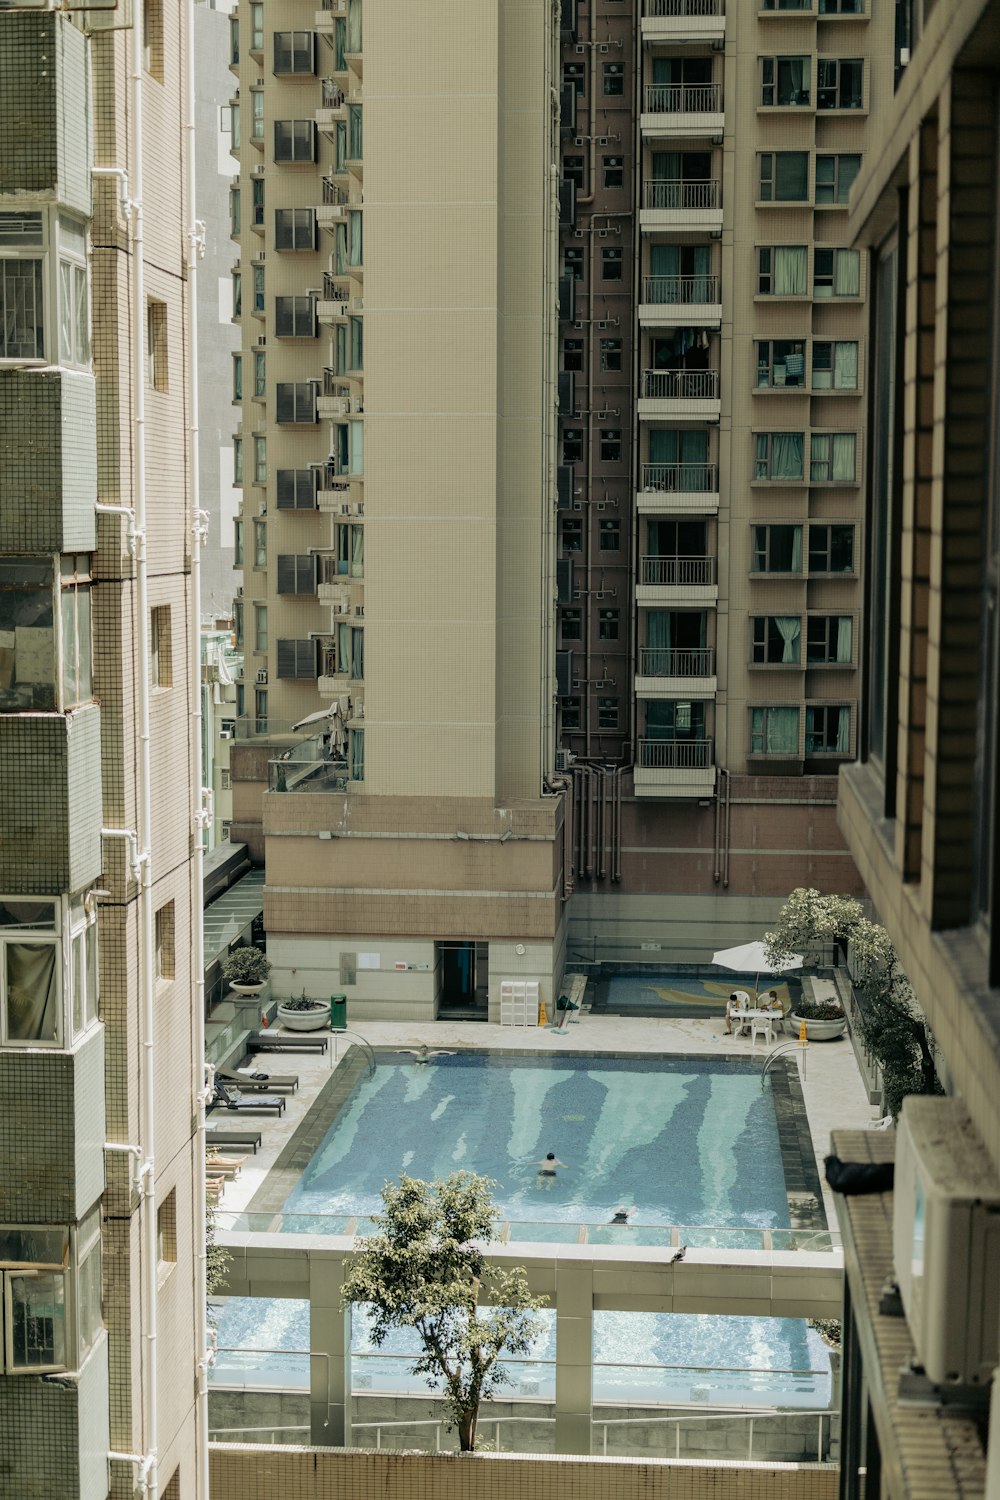 a pool in a courtyard between buildings